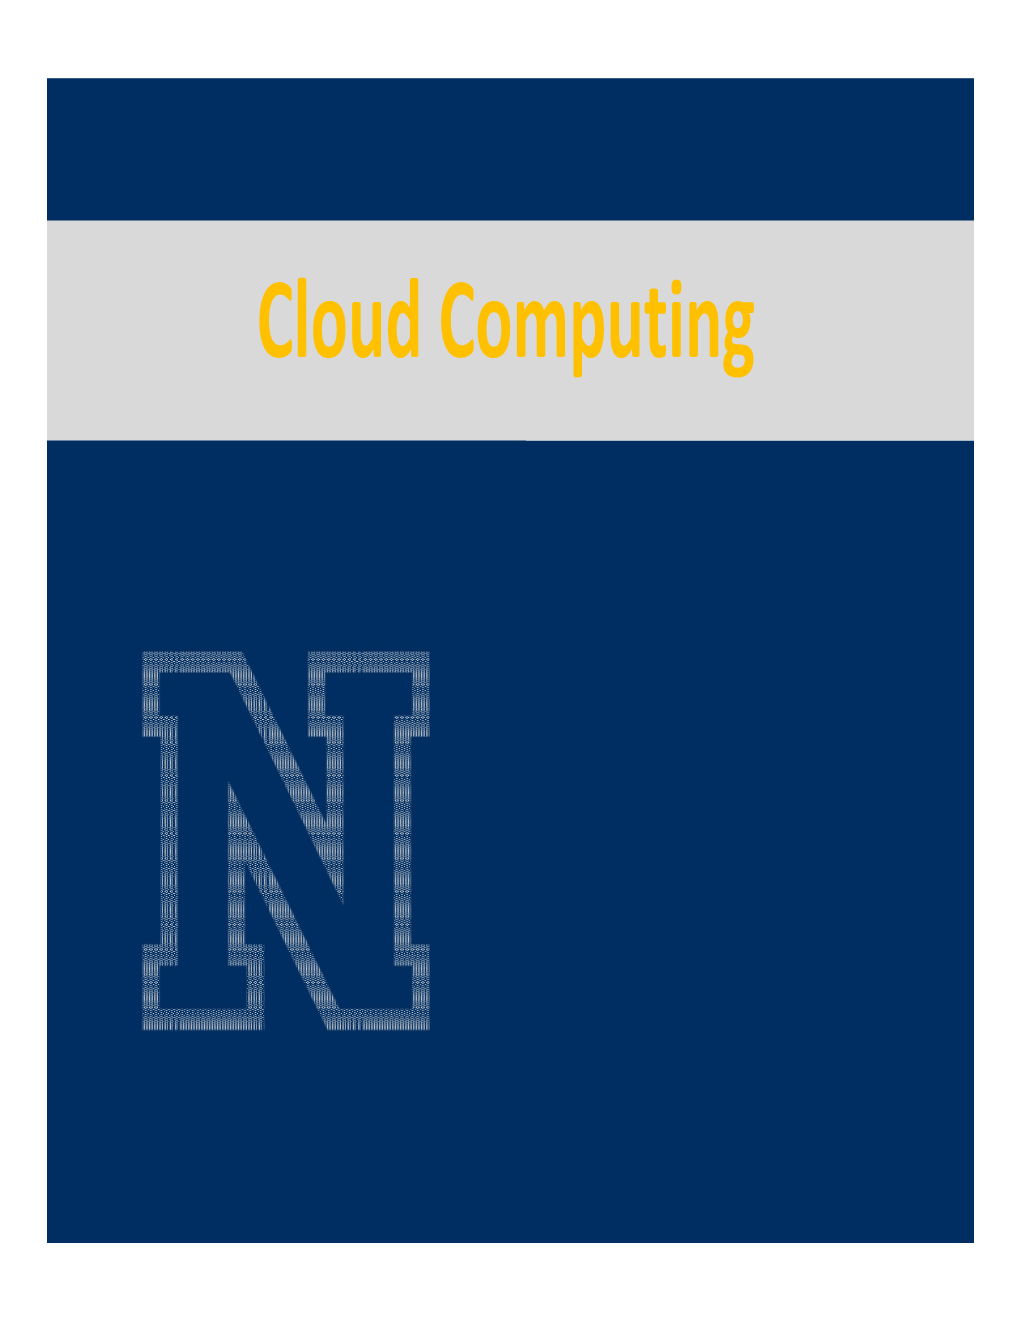 Cloud Computing What Is Cloud Computing?